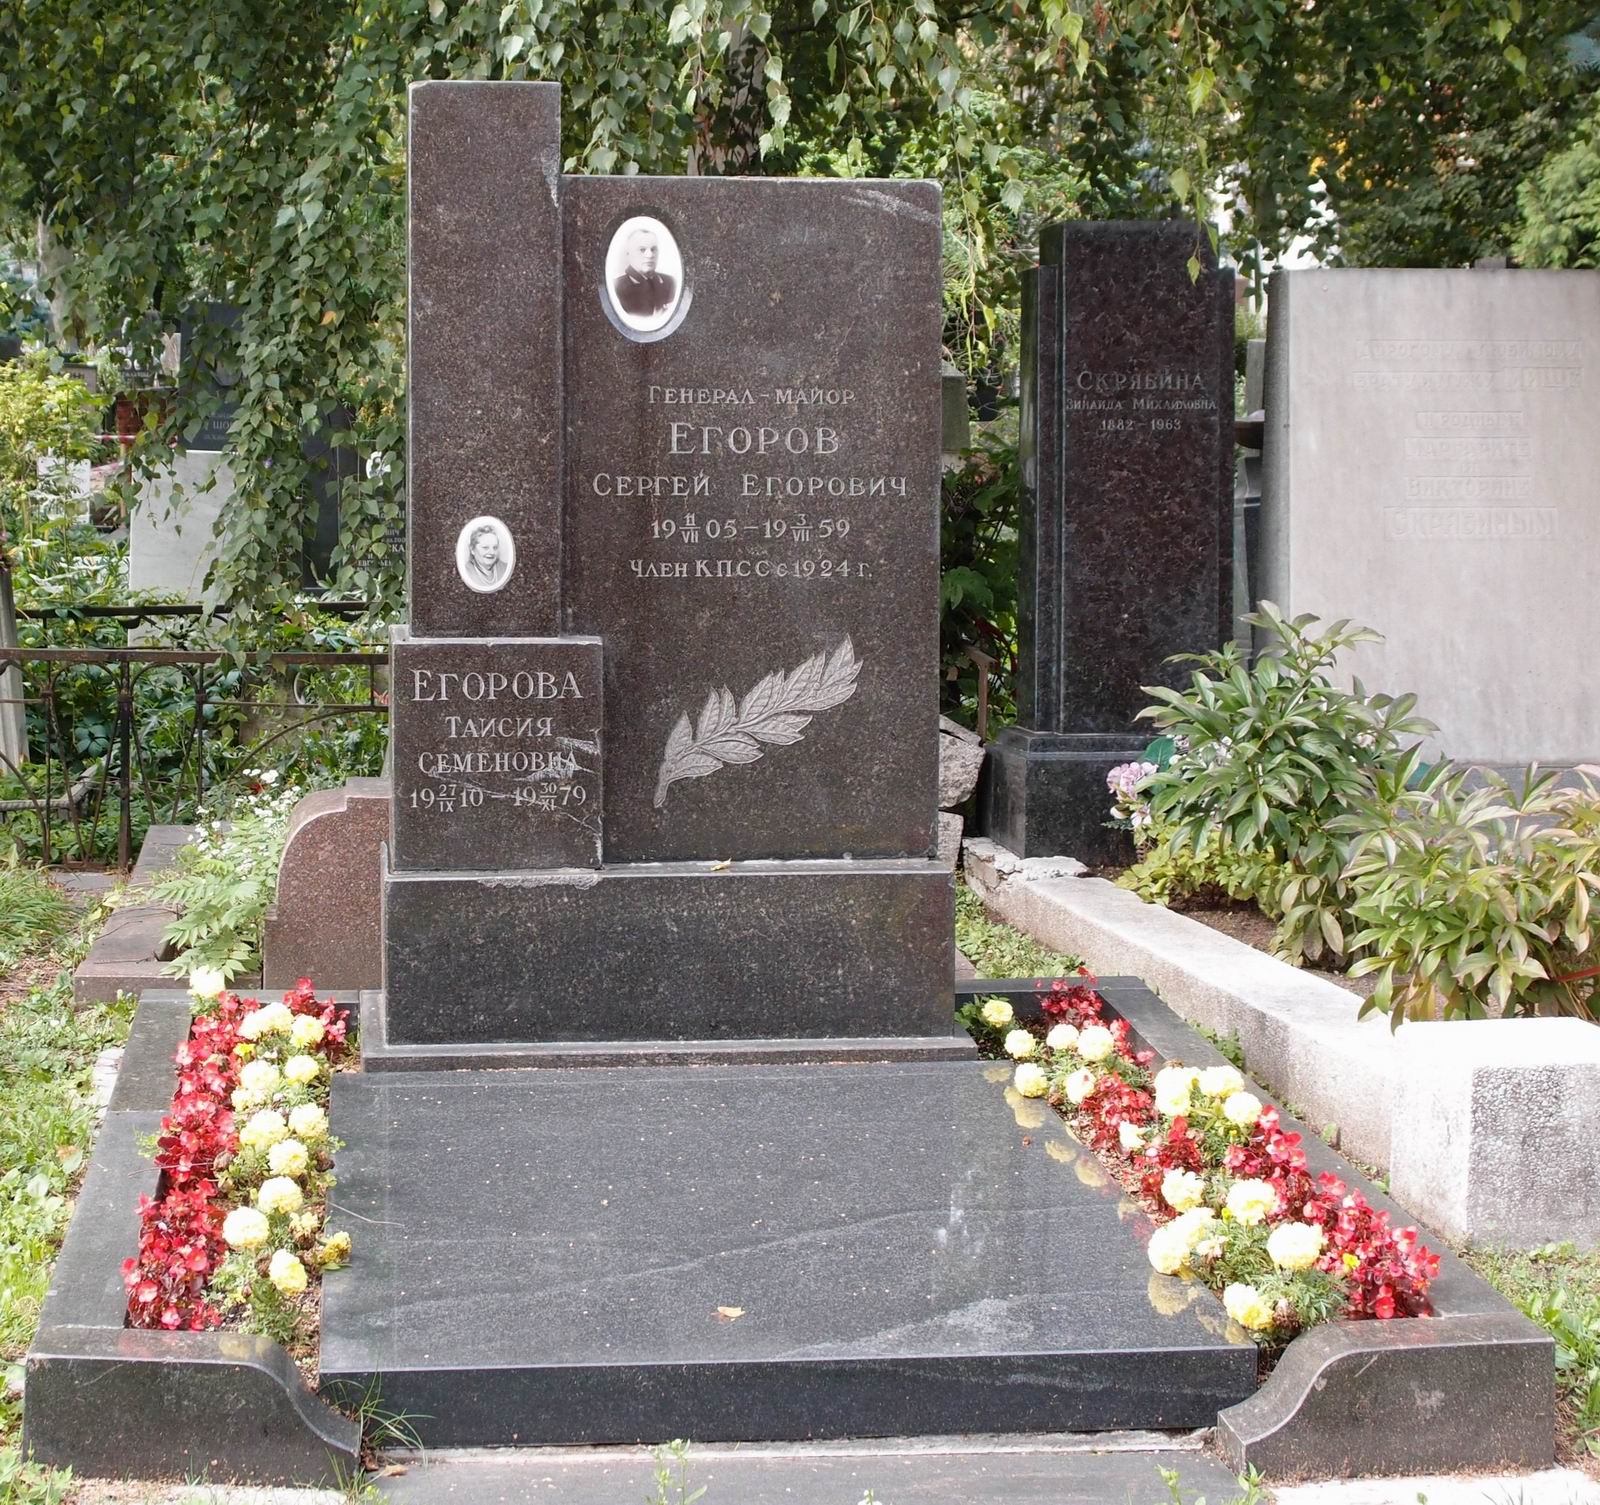 Памятник на могиле Егорова С.Е. (1905-1959), на Новодевичьем кладбище (1-40-5).